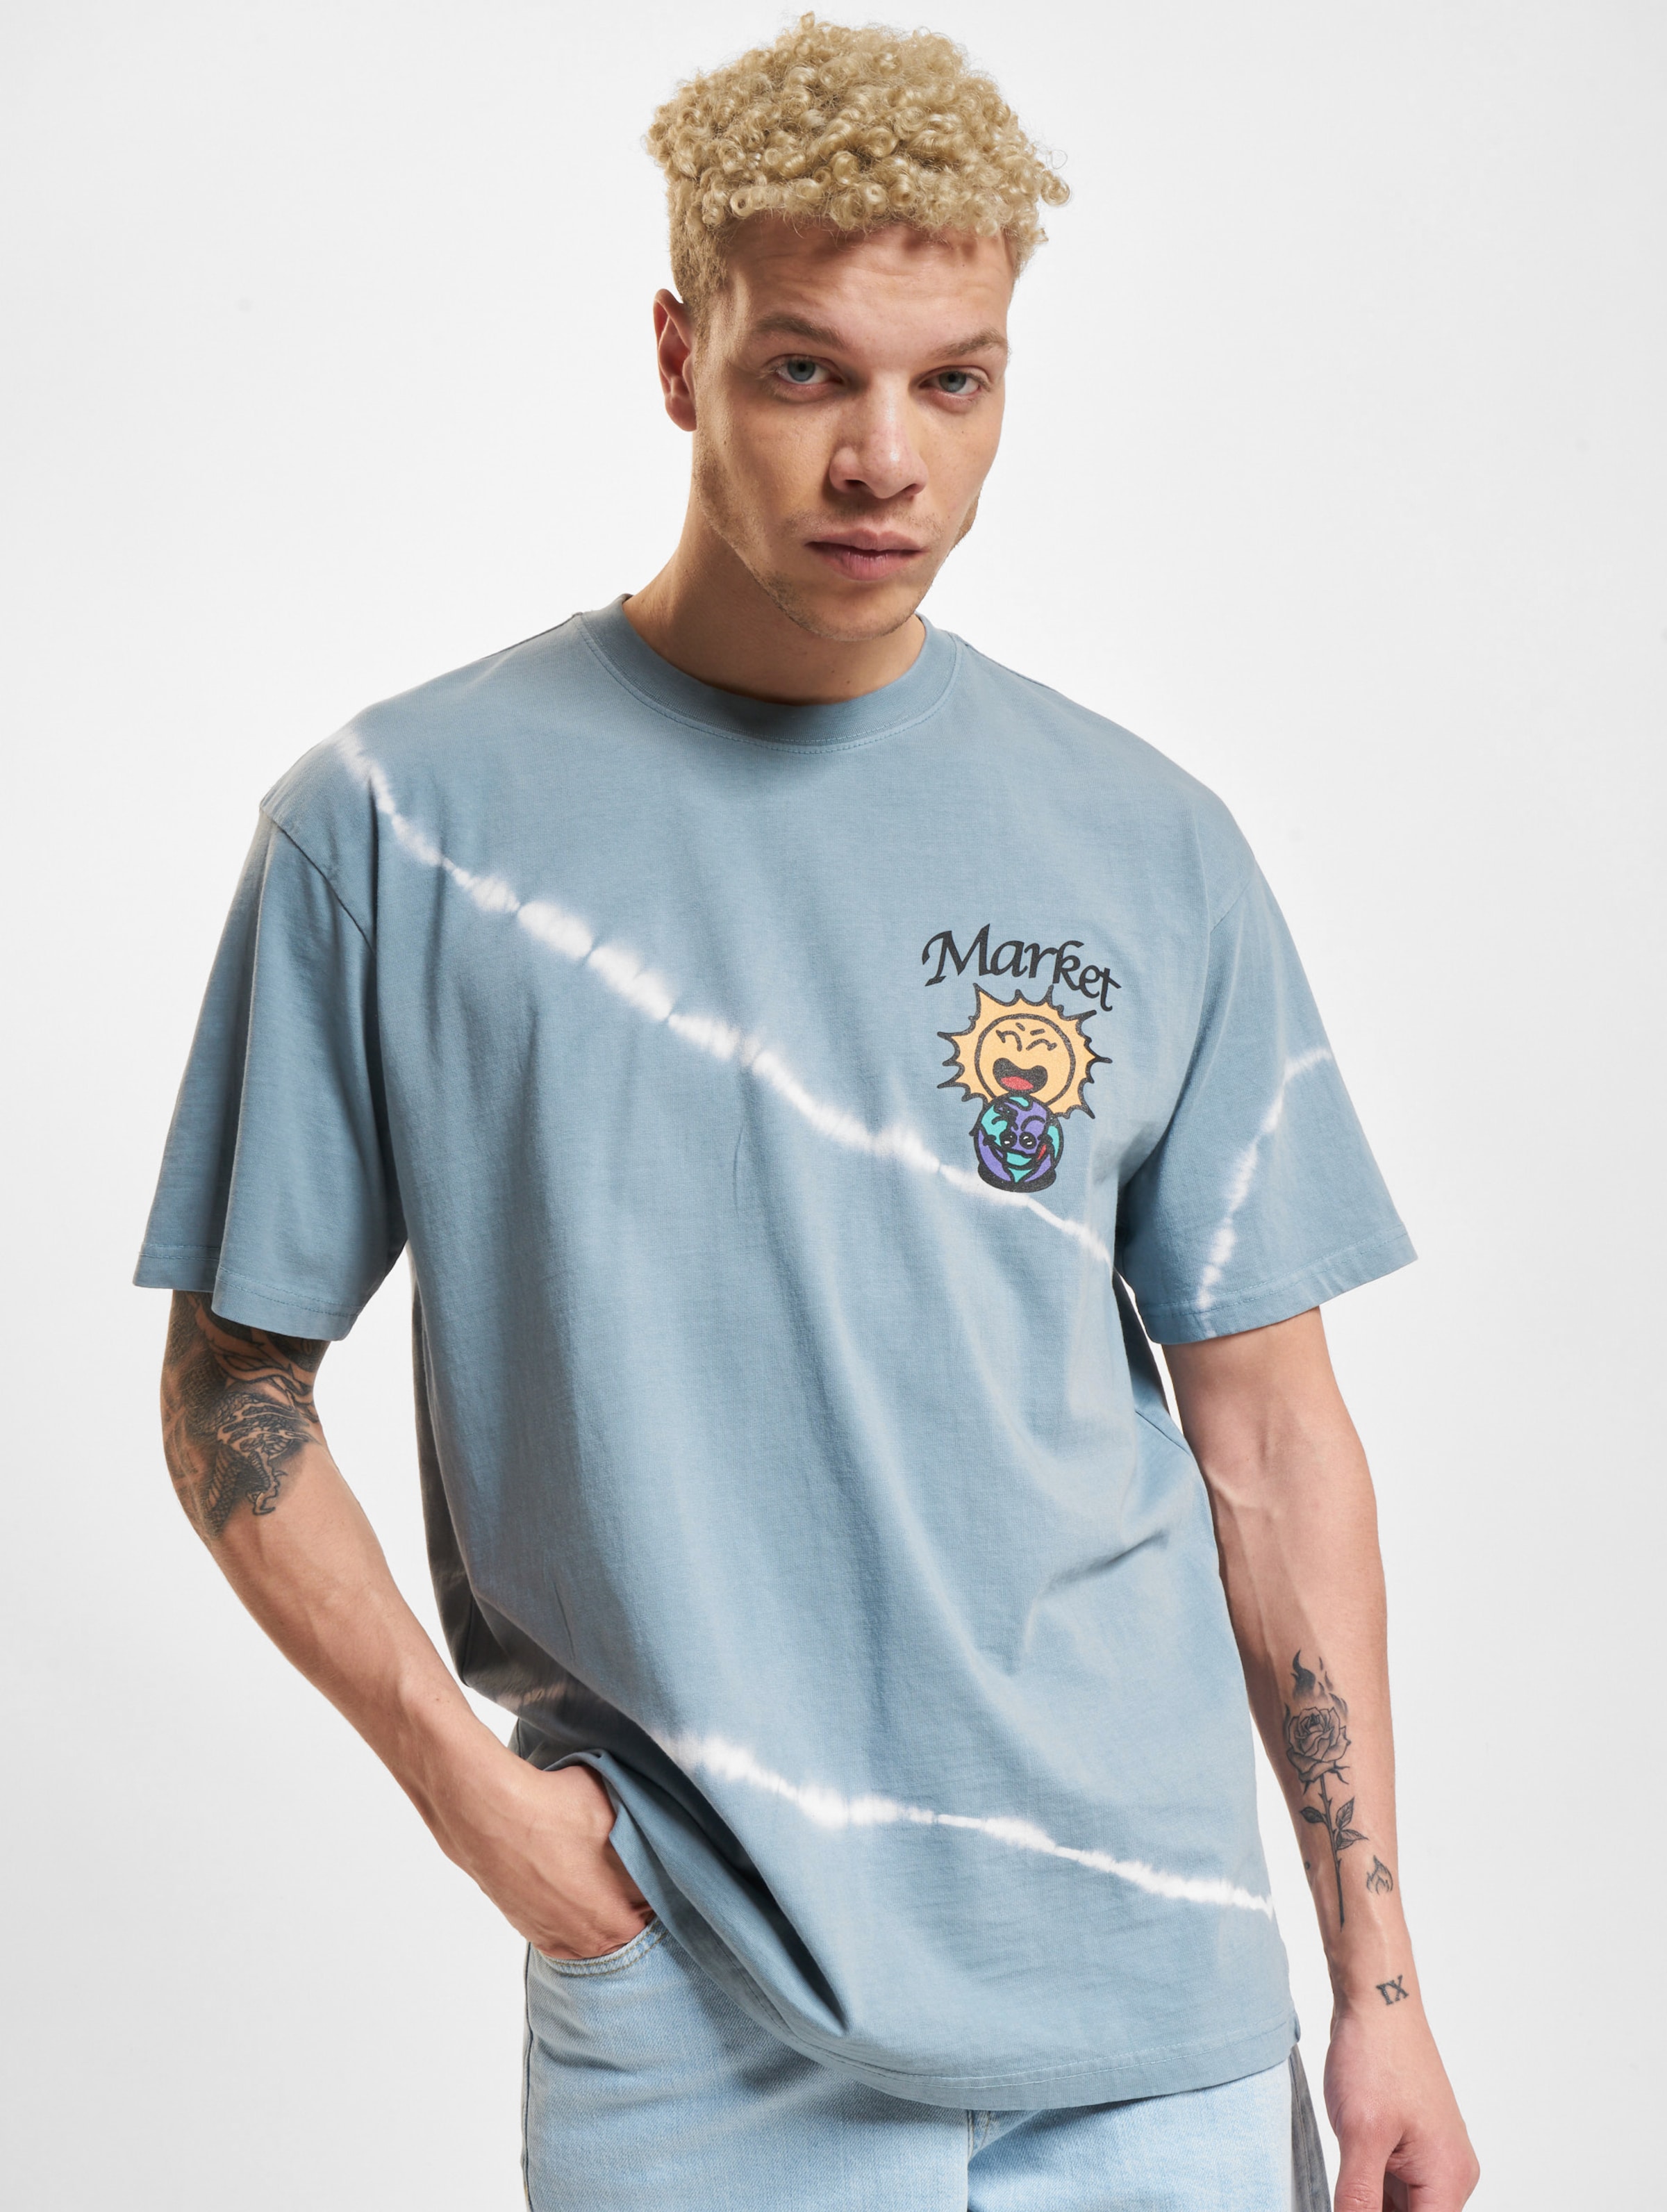 Market Leave No Trace T-Shirts Männer,Unisex op kleur blauw, Maat XXL